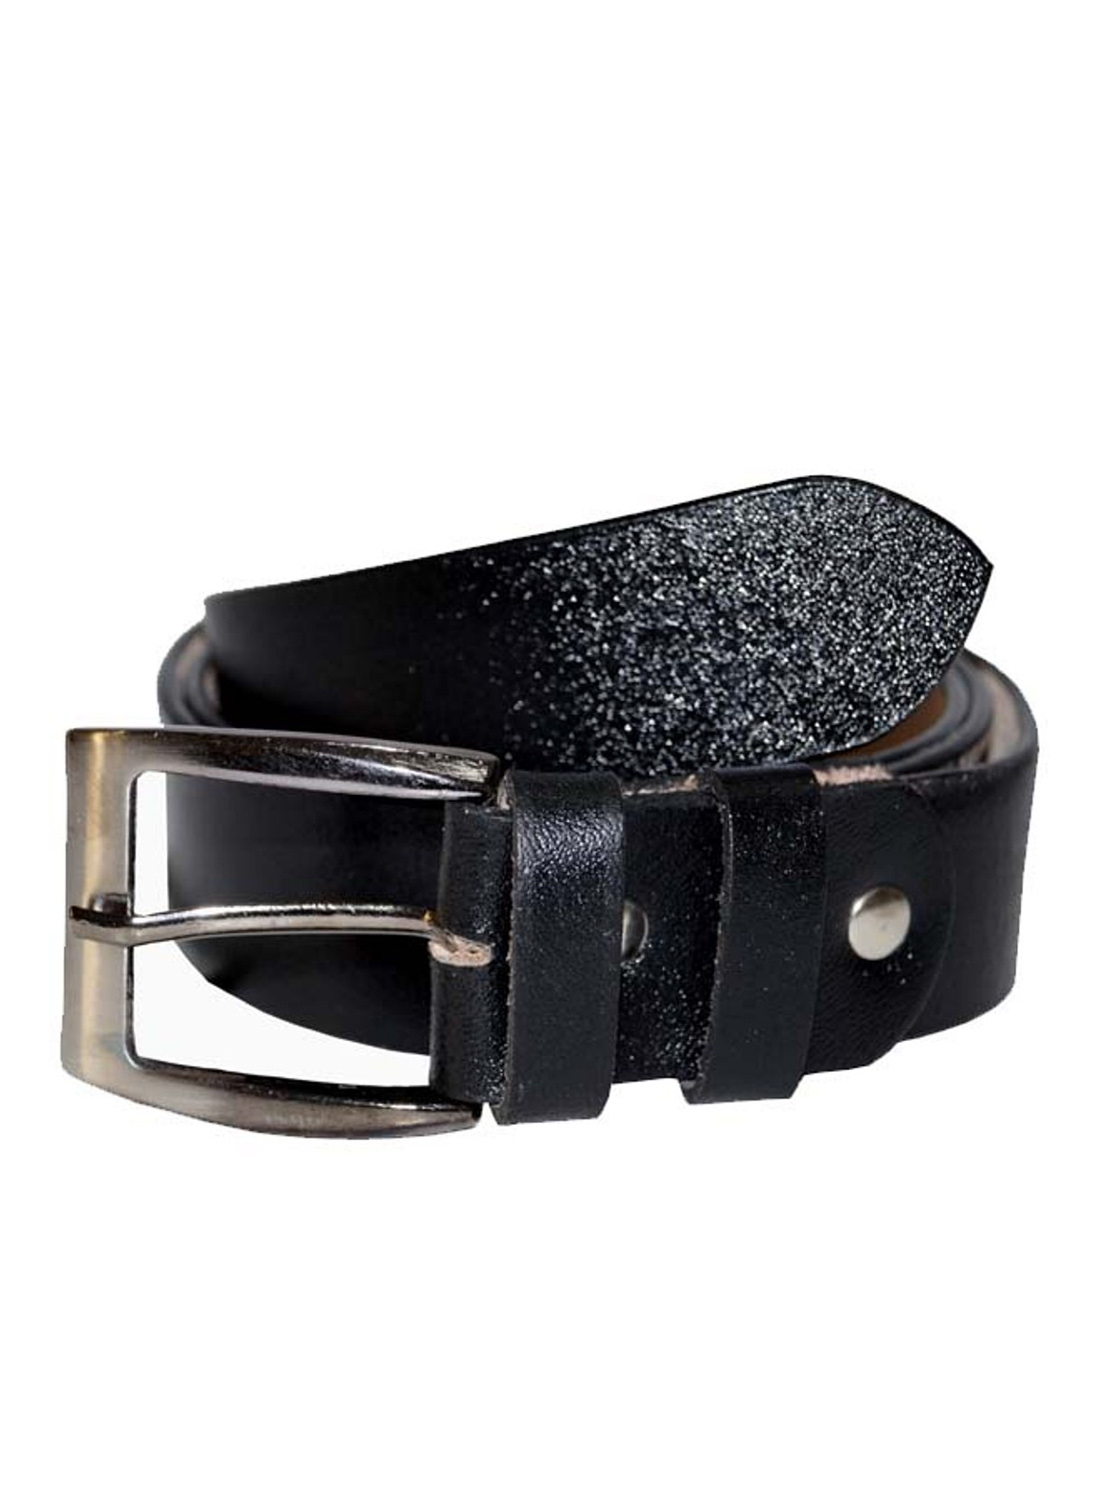 Fashion :: Accessories :: Belts :: Best Seller Formal Leather Mens Belt (Black) - www.neverfullmm.com